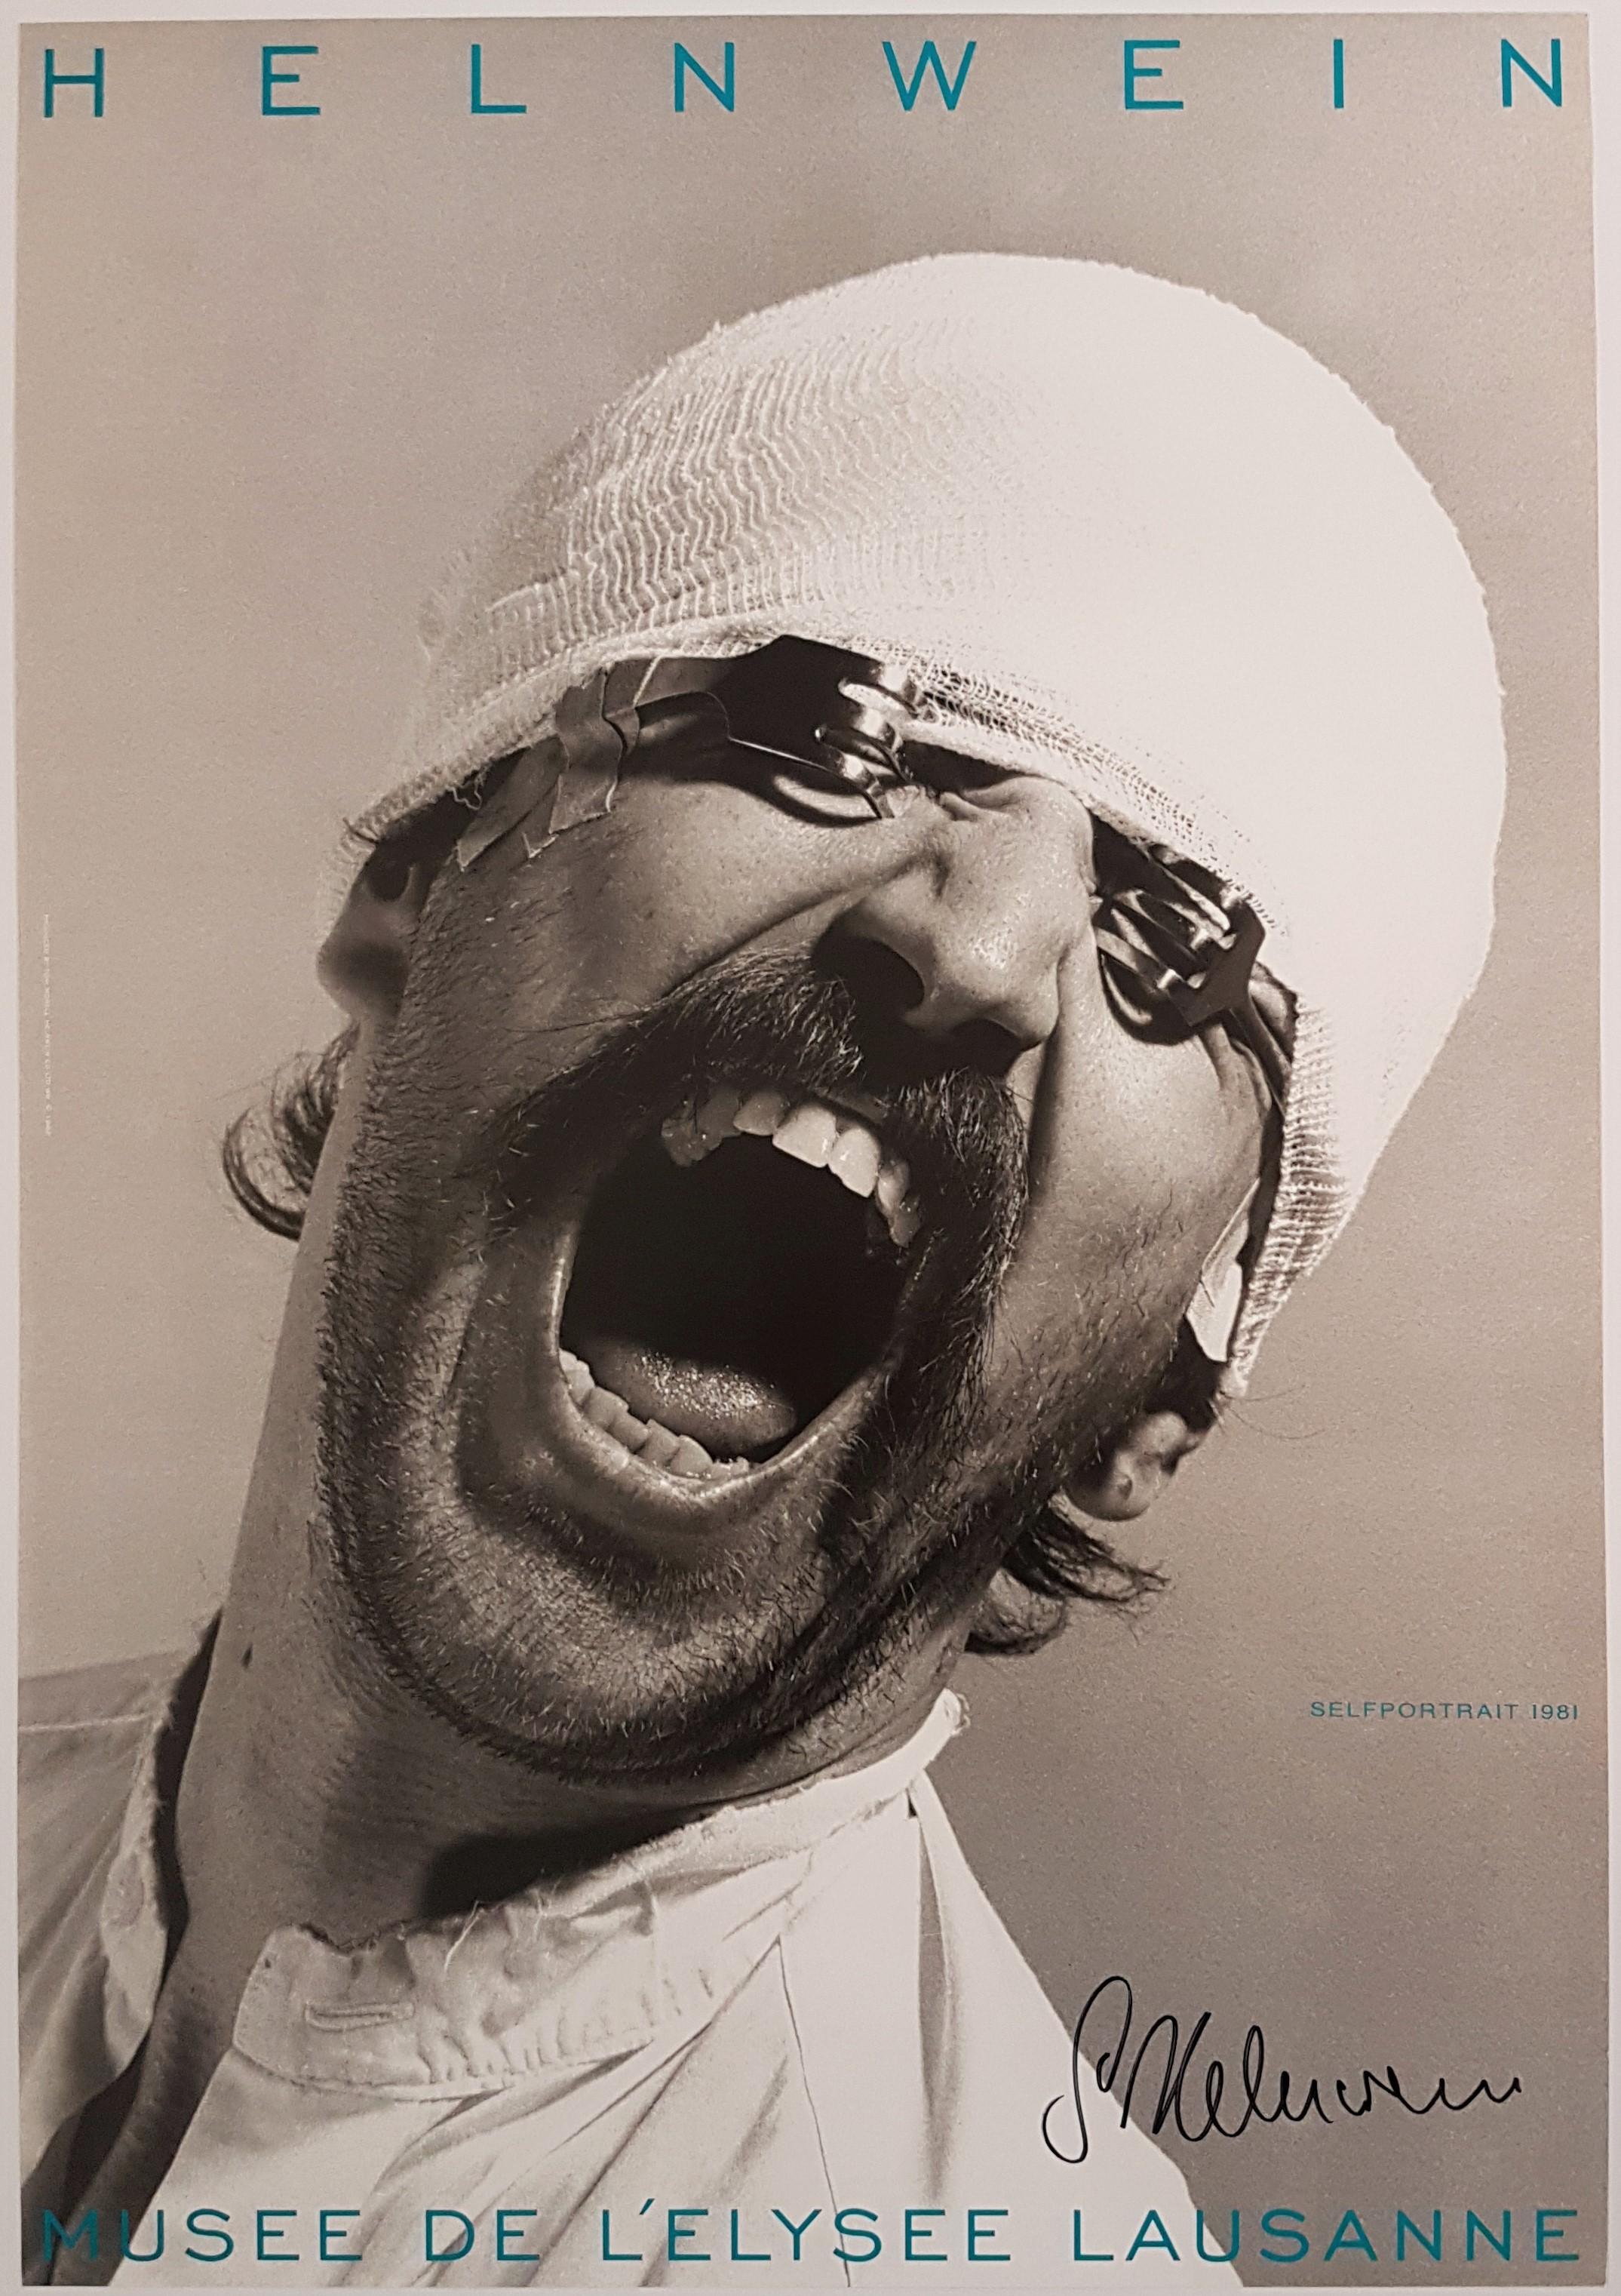 Gottfried Helnwein Portrait Photograph – Self-Portrait, 1992